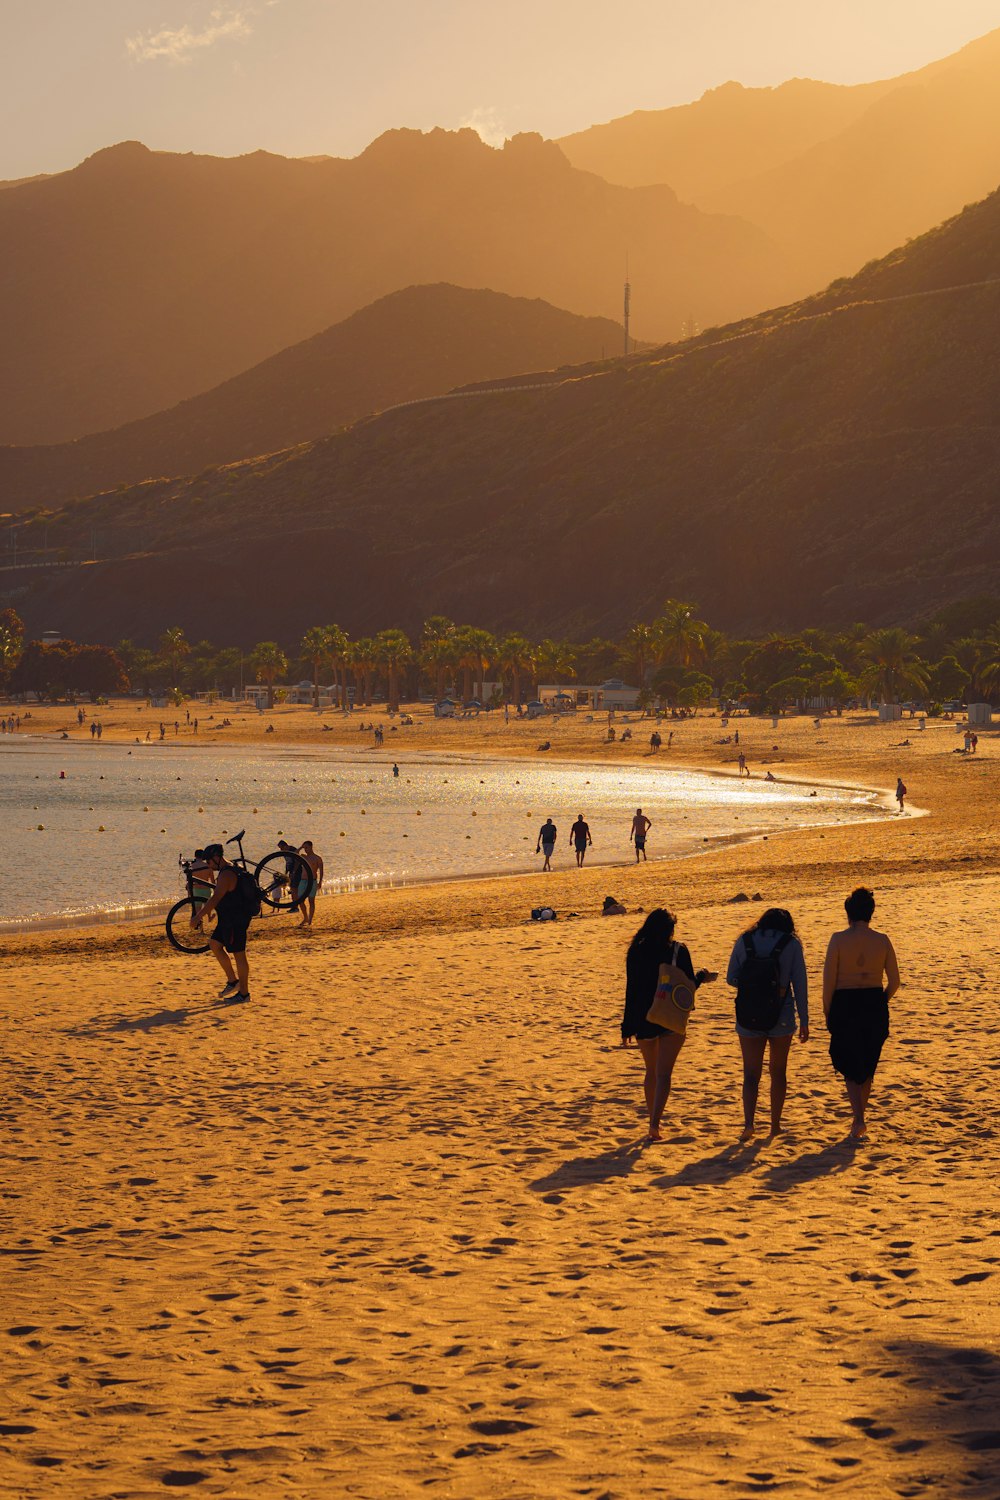 a group of people walking across a sandy beach